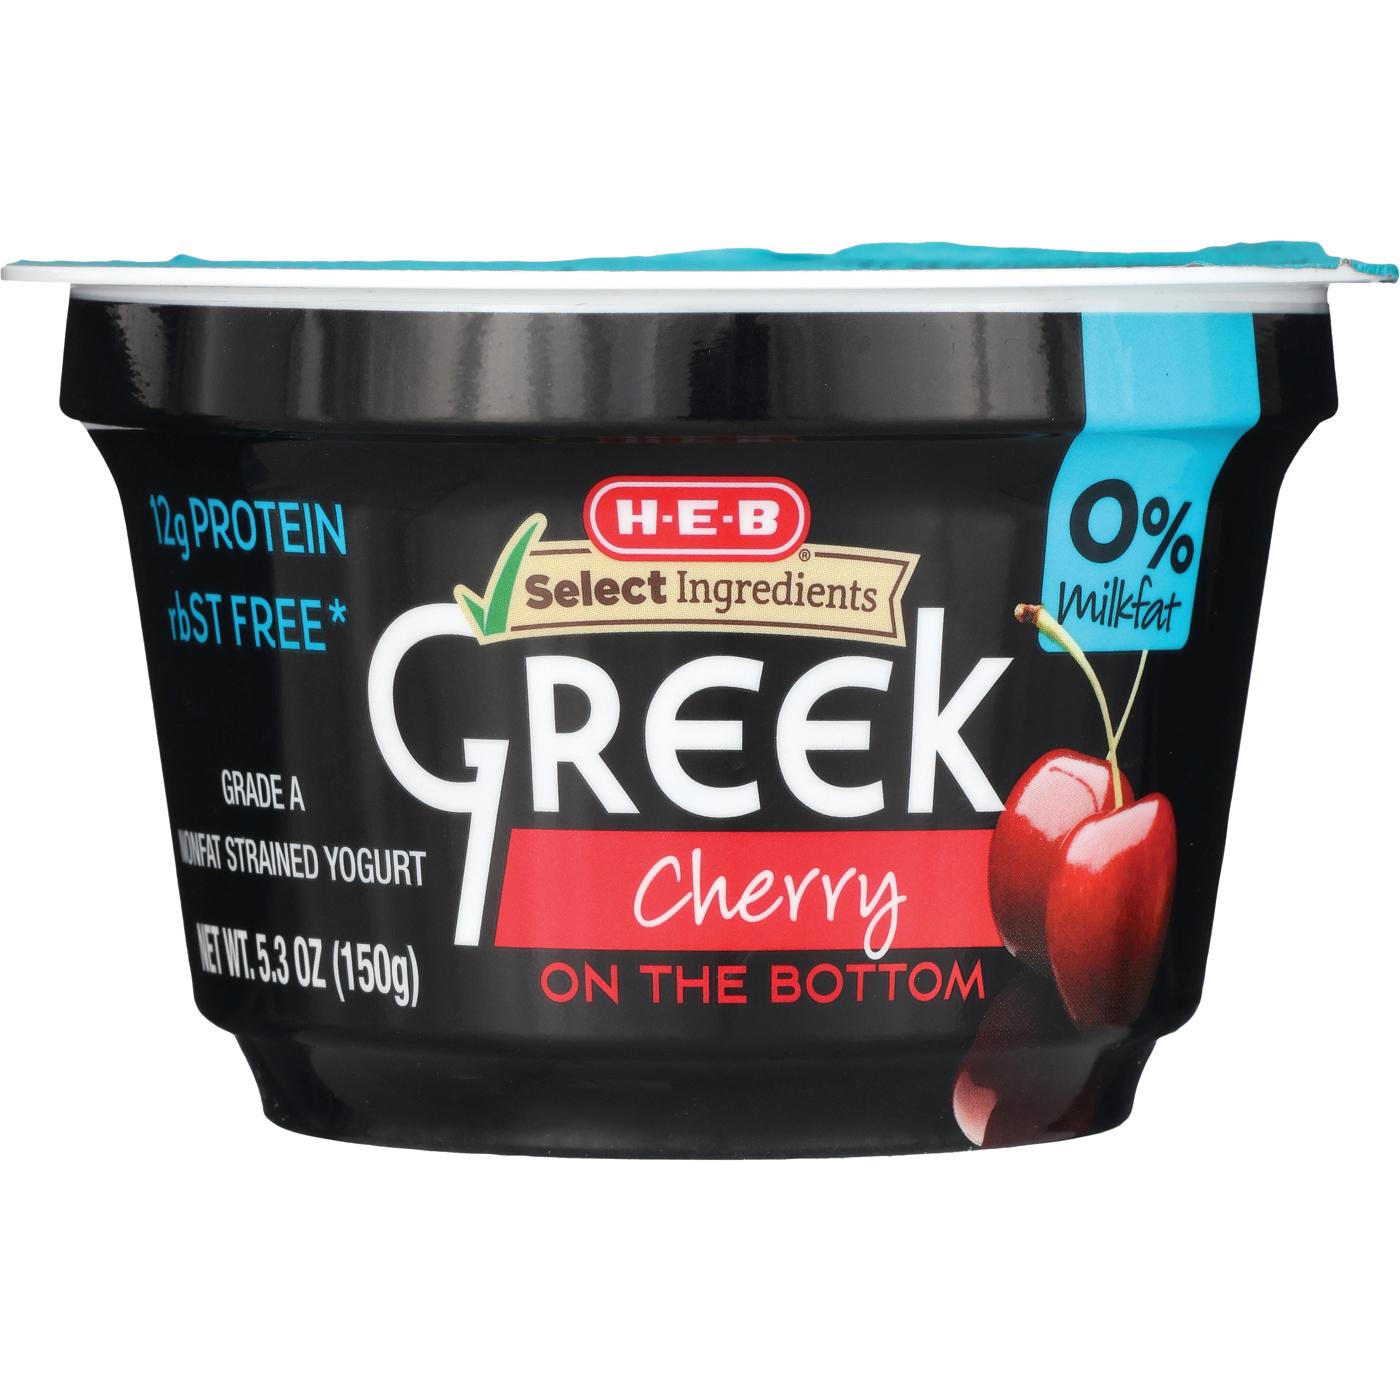 H-E-B Non-Fat Cherry Greek Yogurt; image 1 of 2